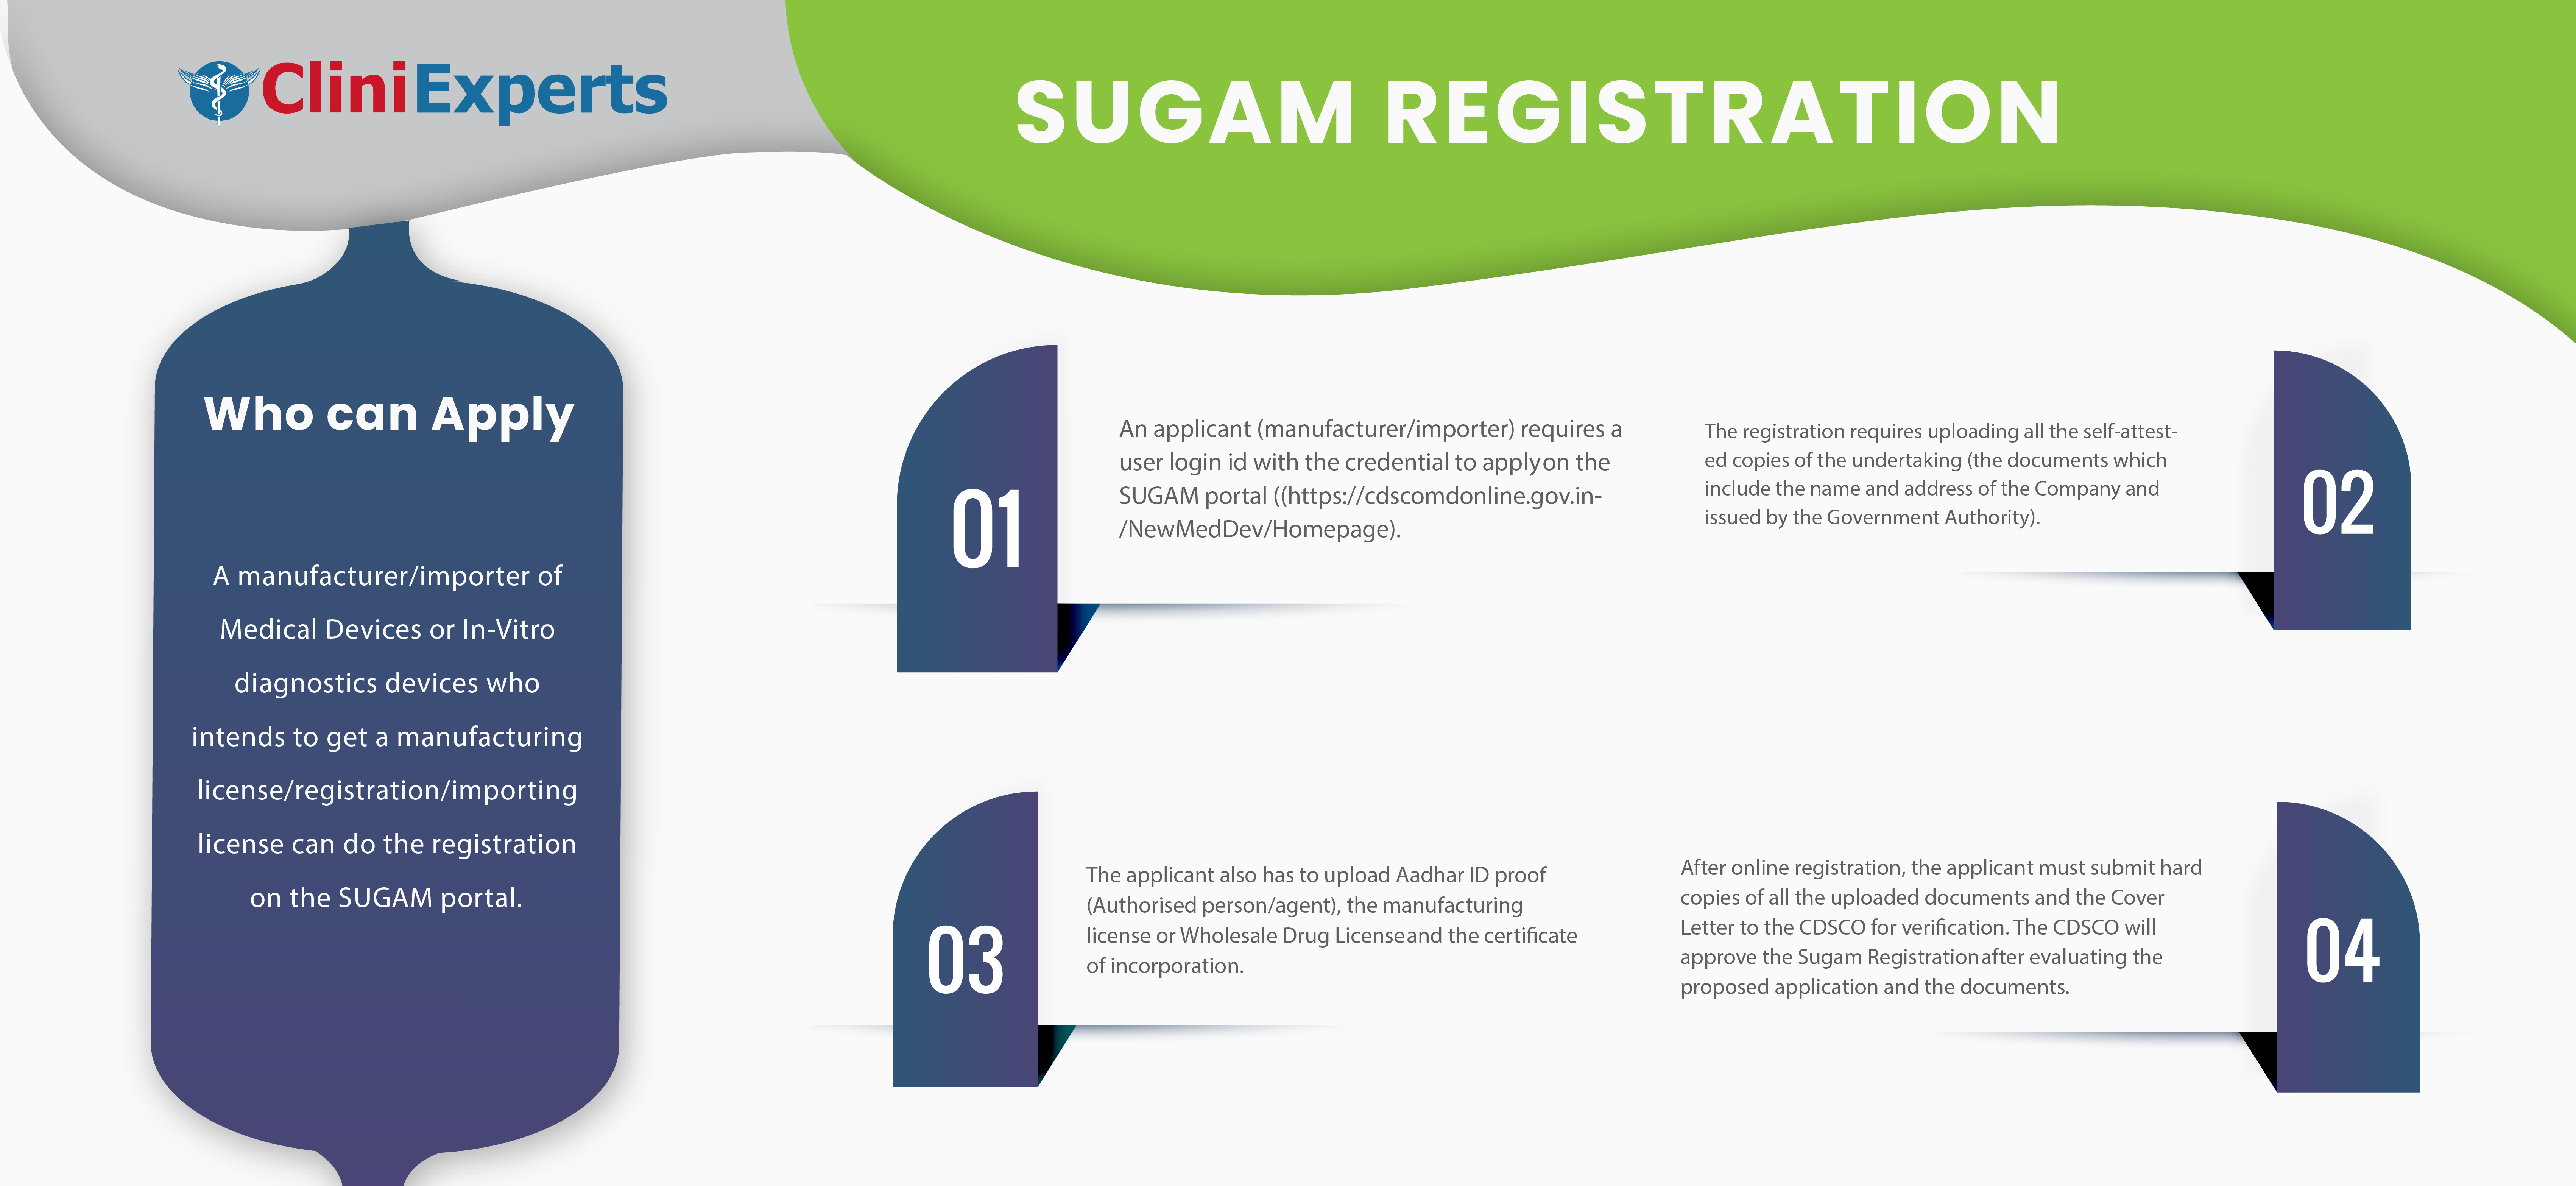 Sugam registration